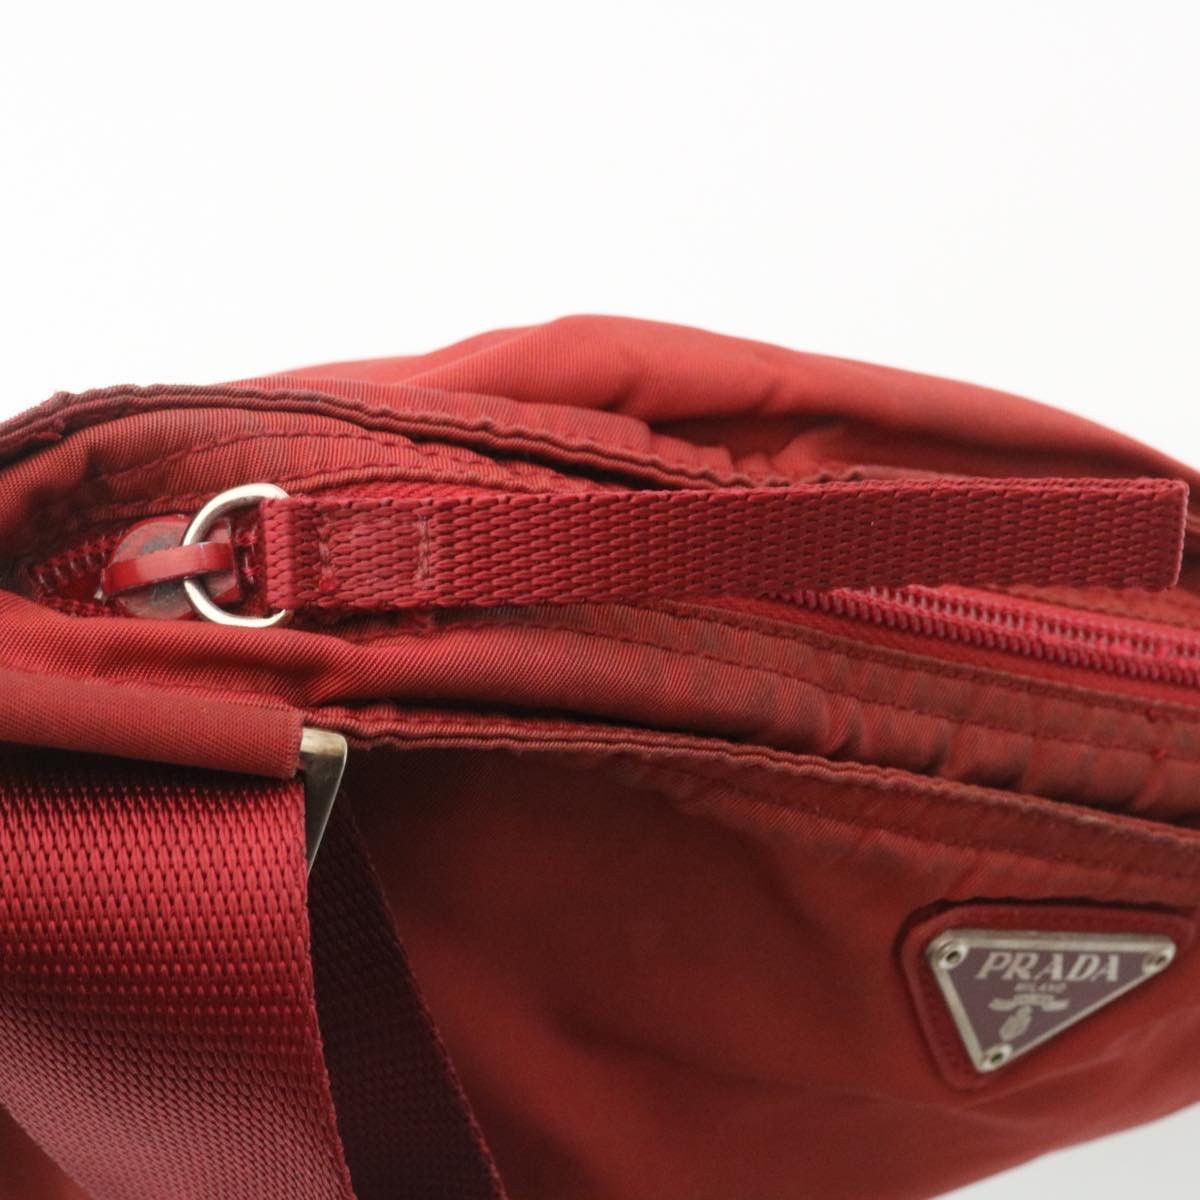 Prada Crossbody Shoulder Bag Size ONE SIZE - 6 Thumbnail